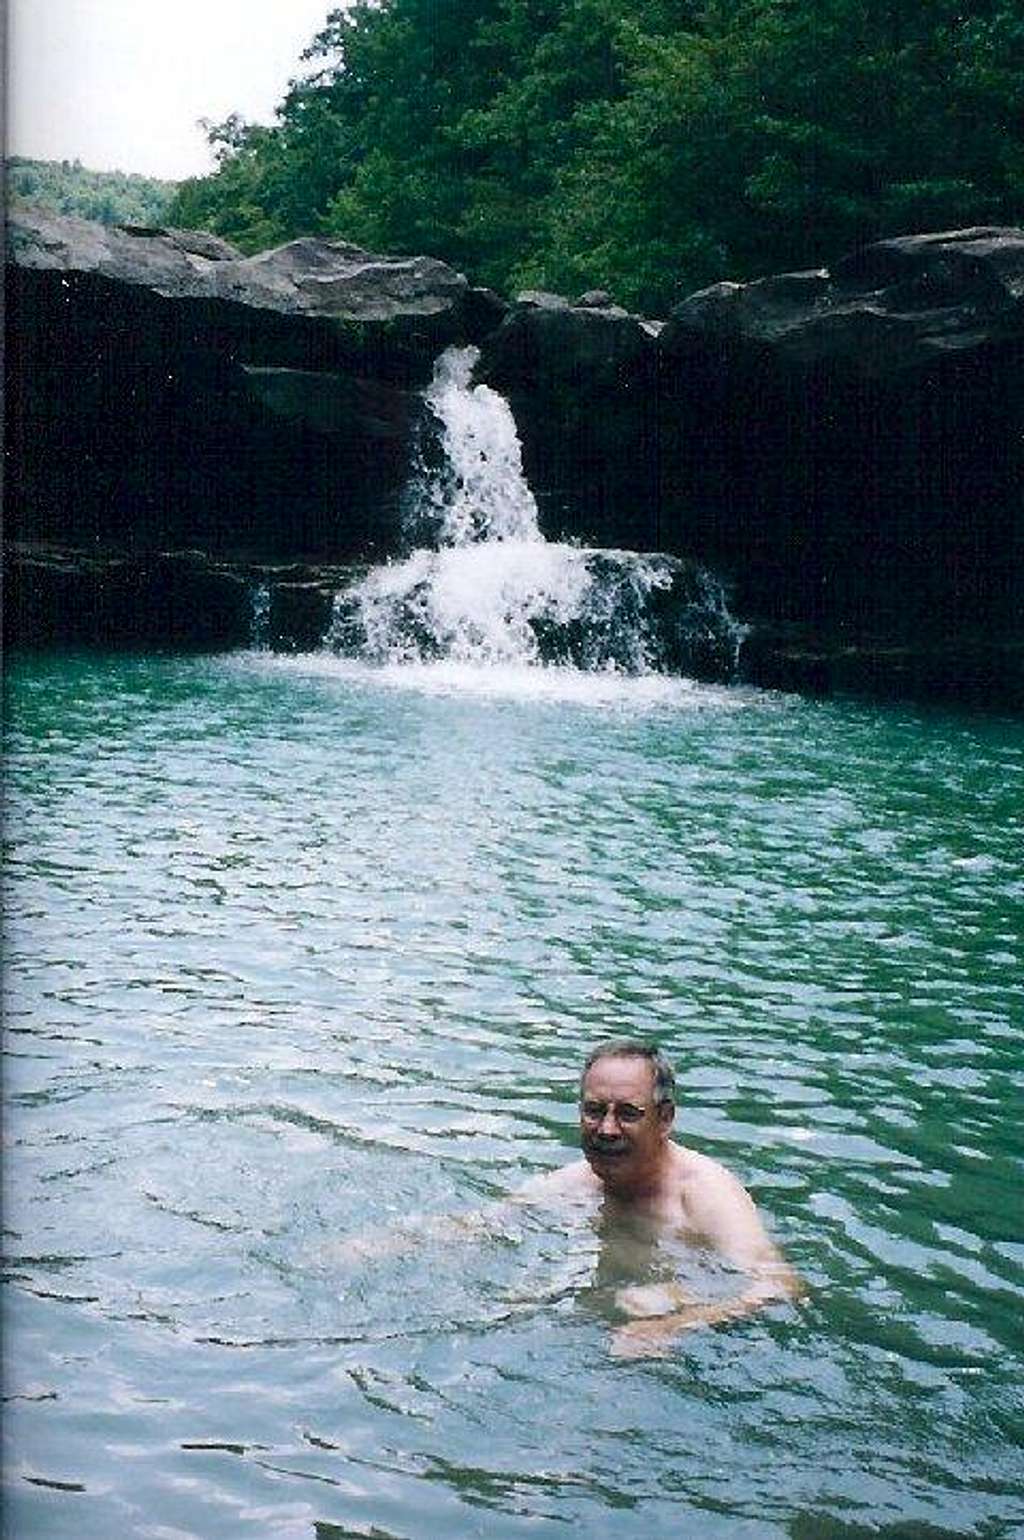 Swimhole below the falls